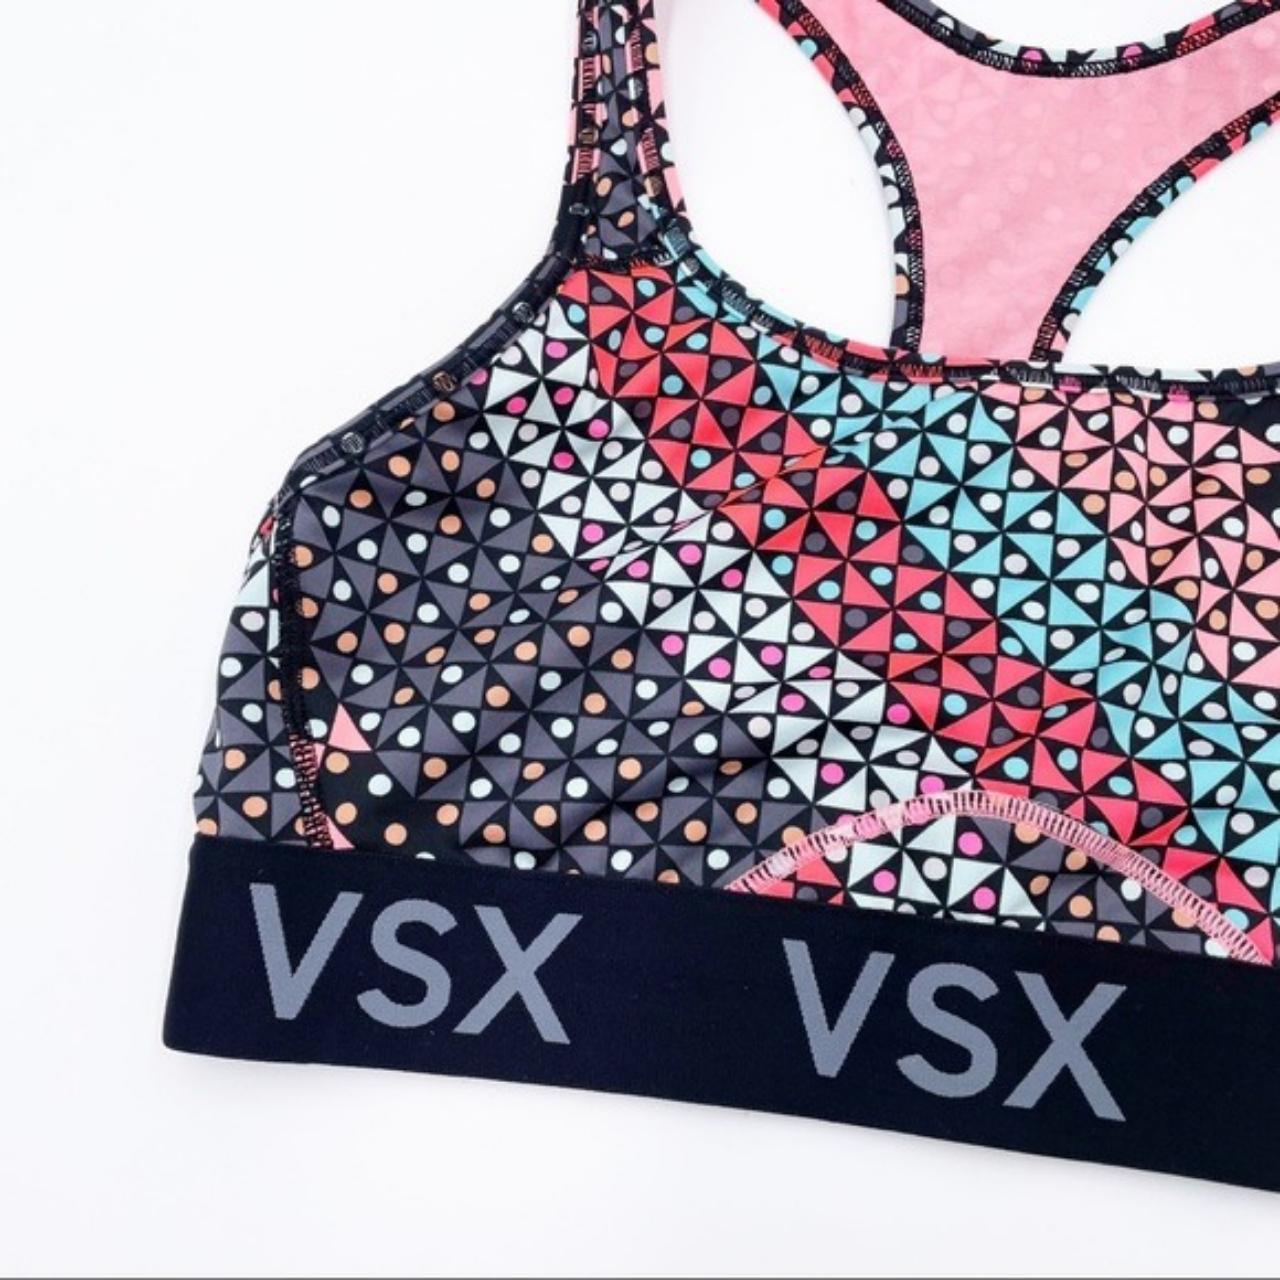 Victoria's Secret VSX Sport The Player Racerback